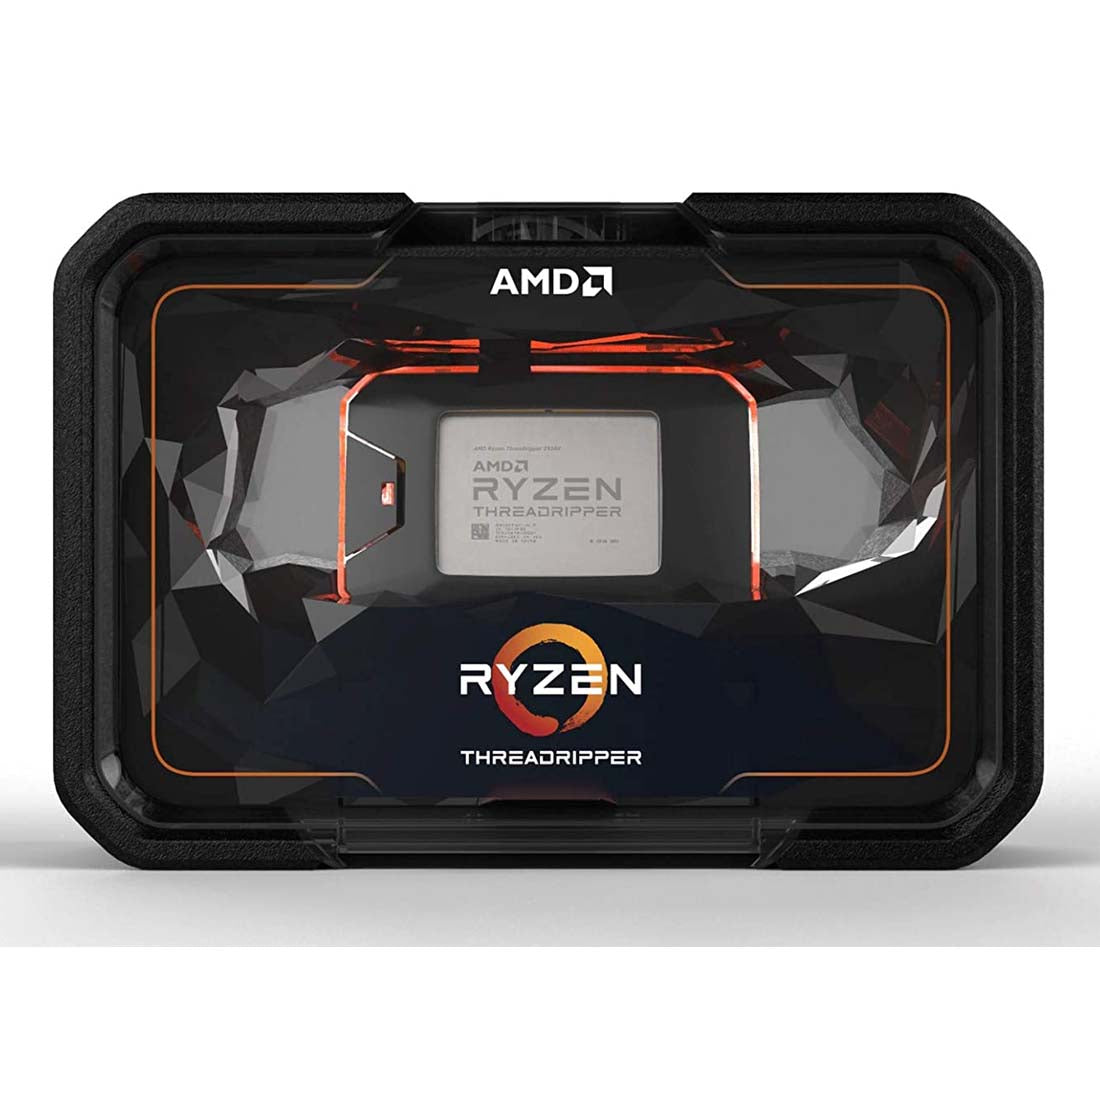 AMD Ryzen थ्रेडिपर 2950X डेस्कटॉप प्रोसेसर 16 कोर 4.4GHz तक 40MB कैश sTR4 सॉकेट